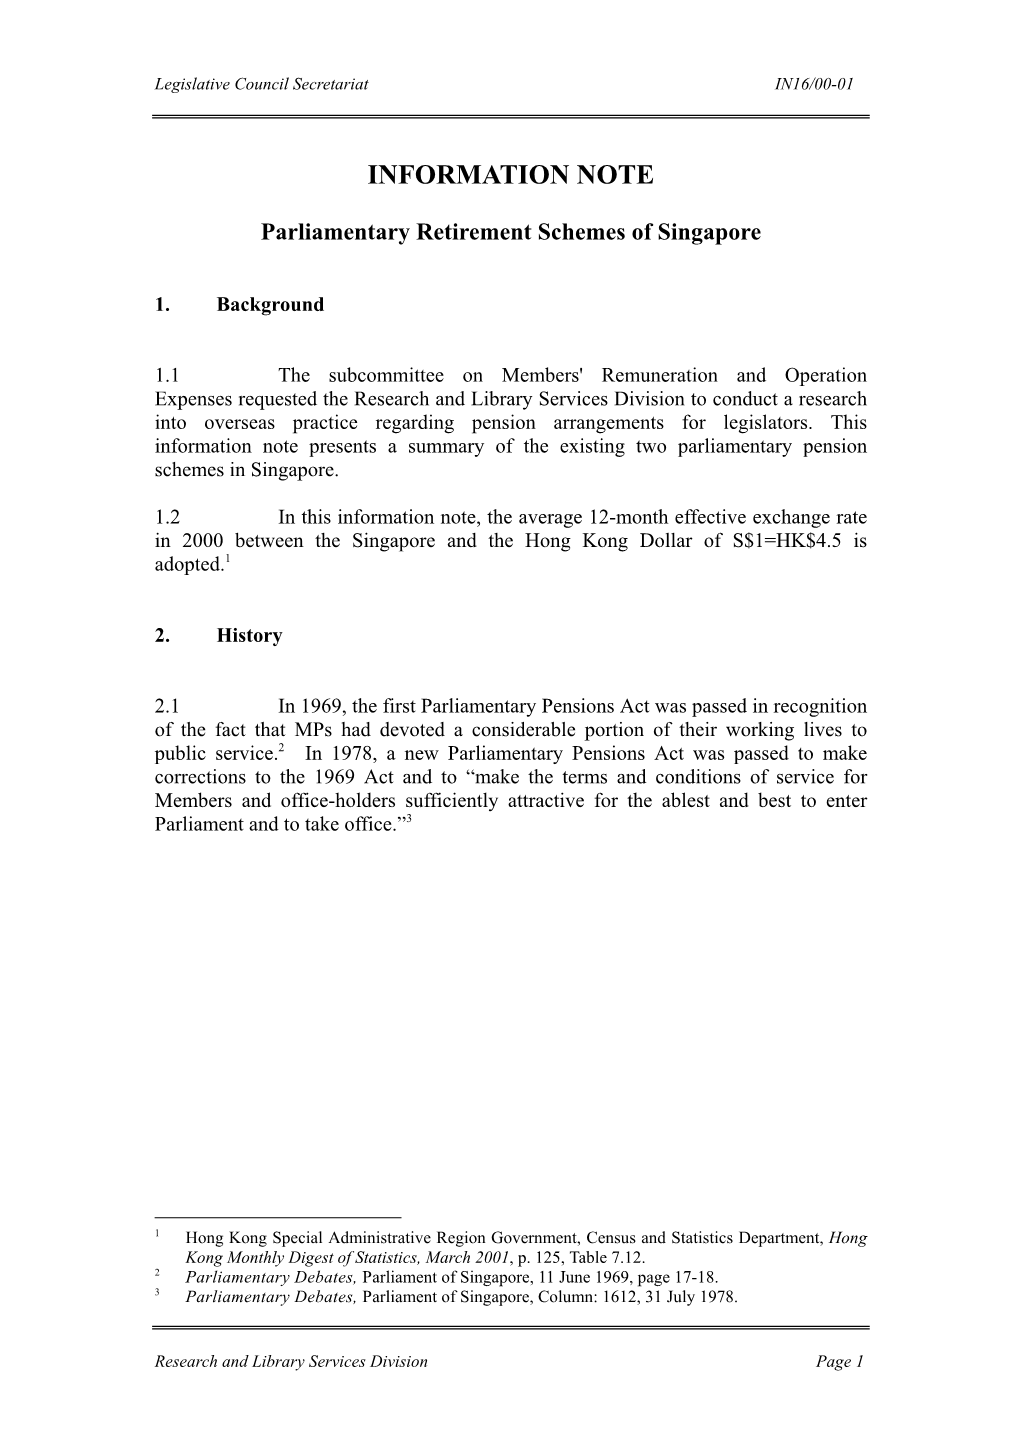 Parliamentary Retirement Schemes of Singapore